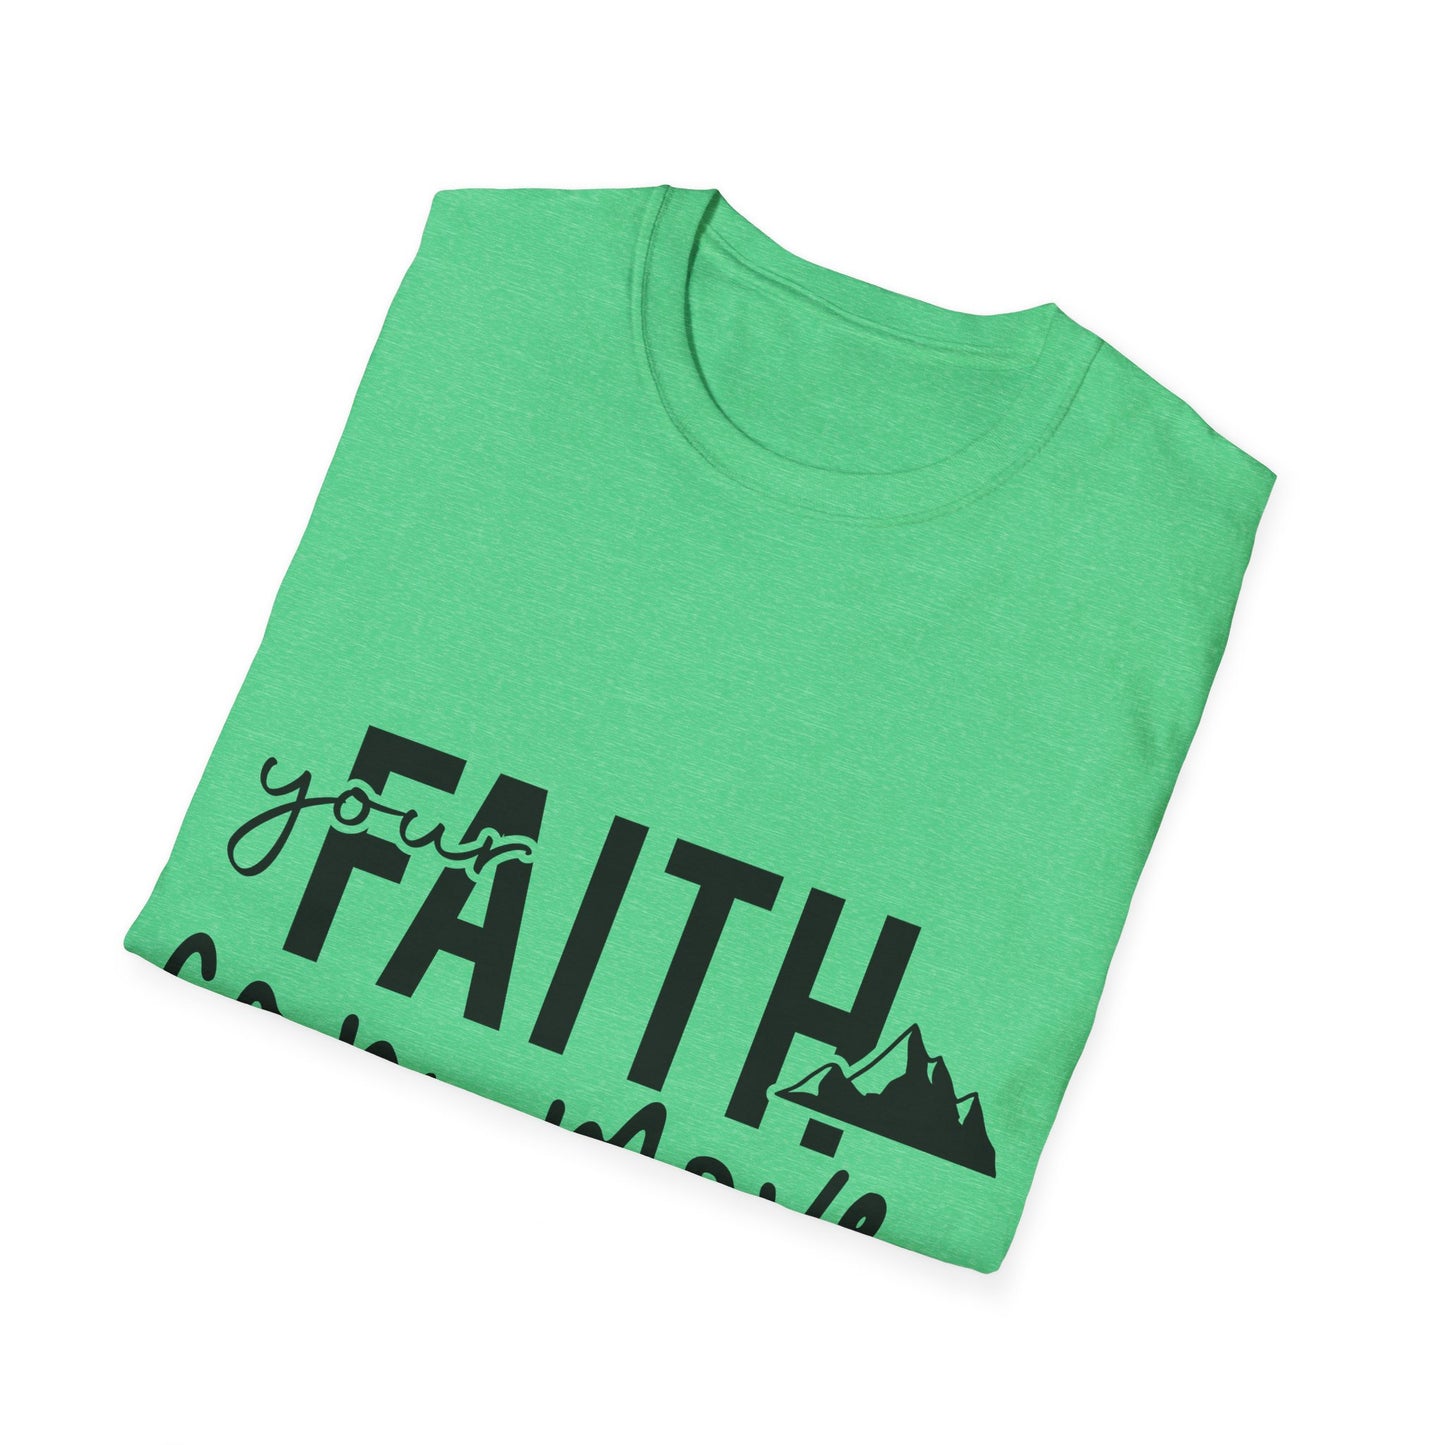 Your Faith Can Move Mountains Matthew 17,20 Triple Viking T-Shirt